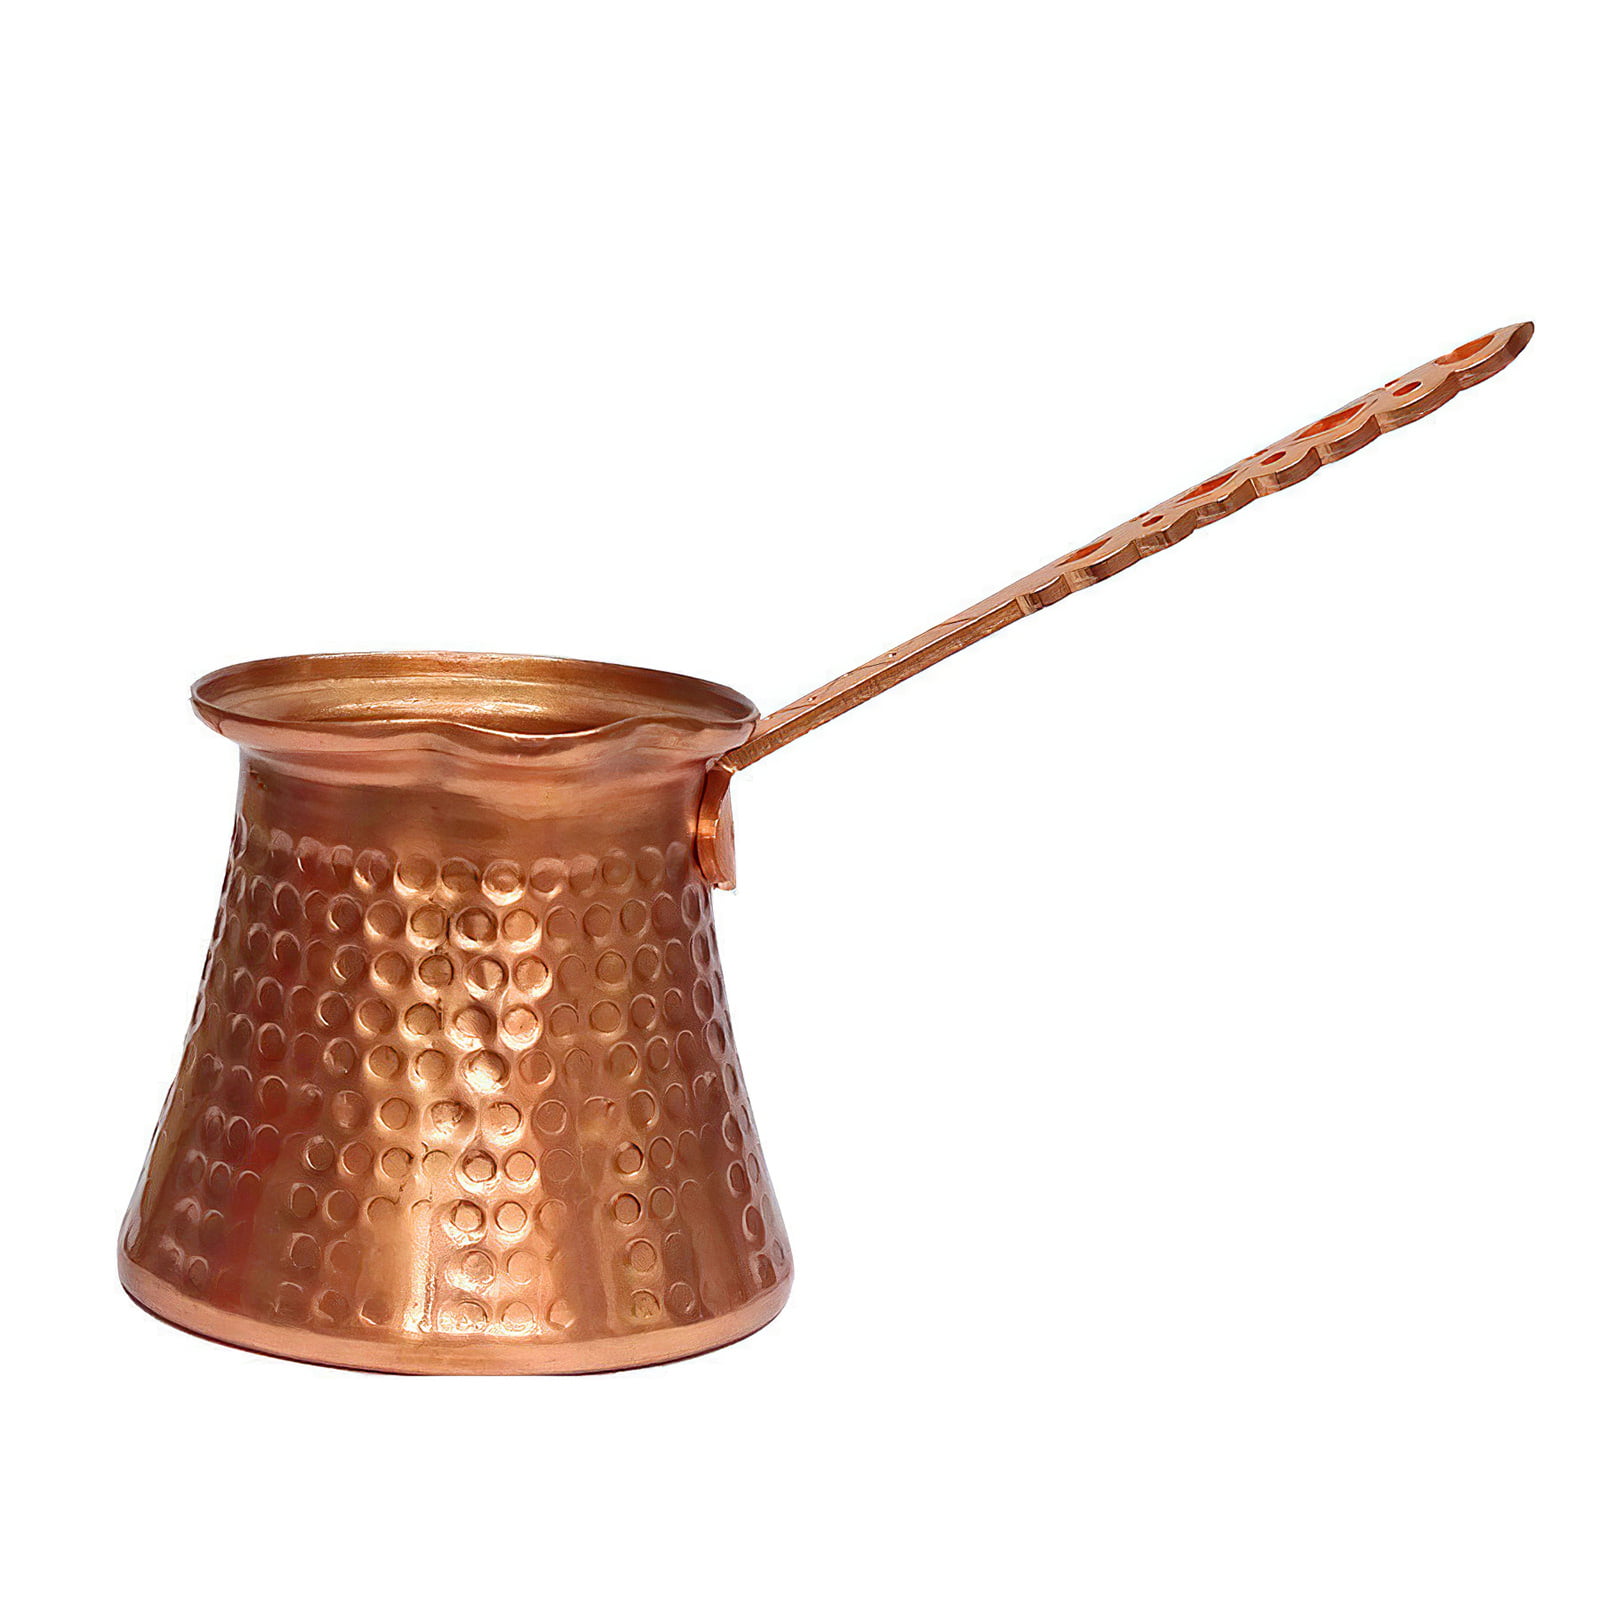 Turkish Coffee Maker Pot handmade Copper coffee maker Coffee pot Coffee Maker Copper cookware Vintage coffee maker